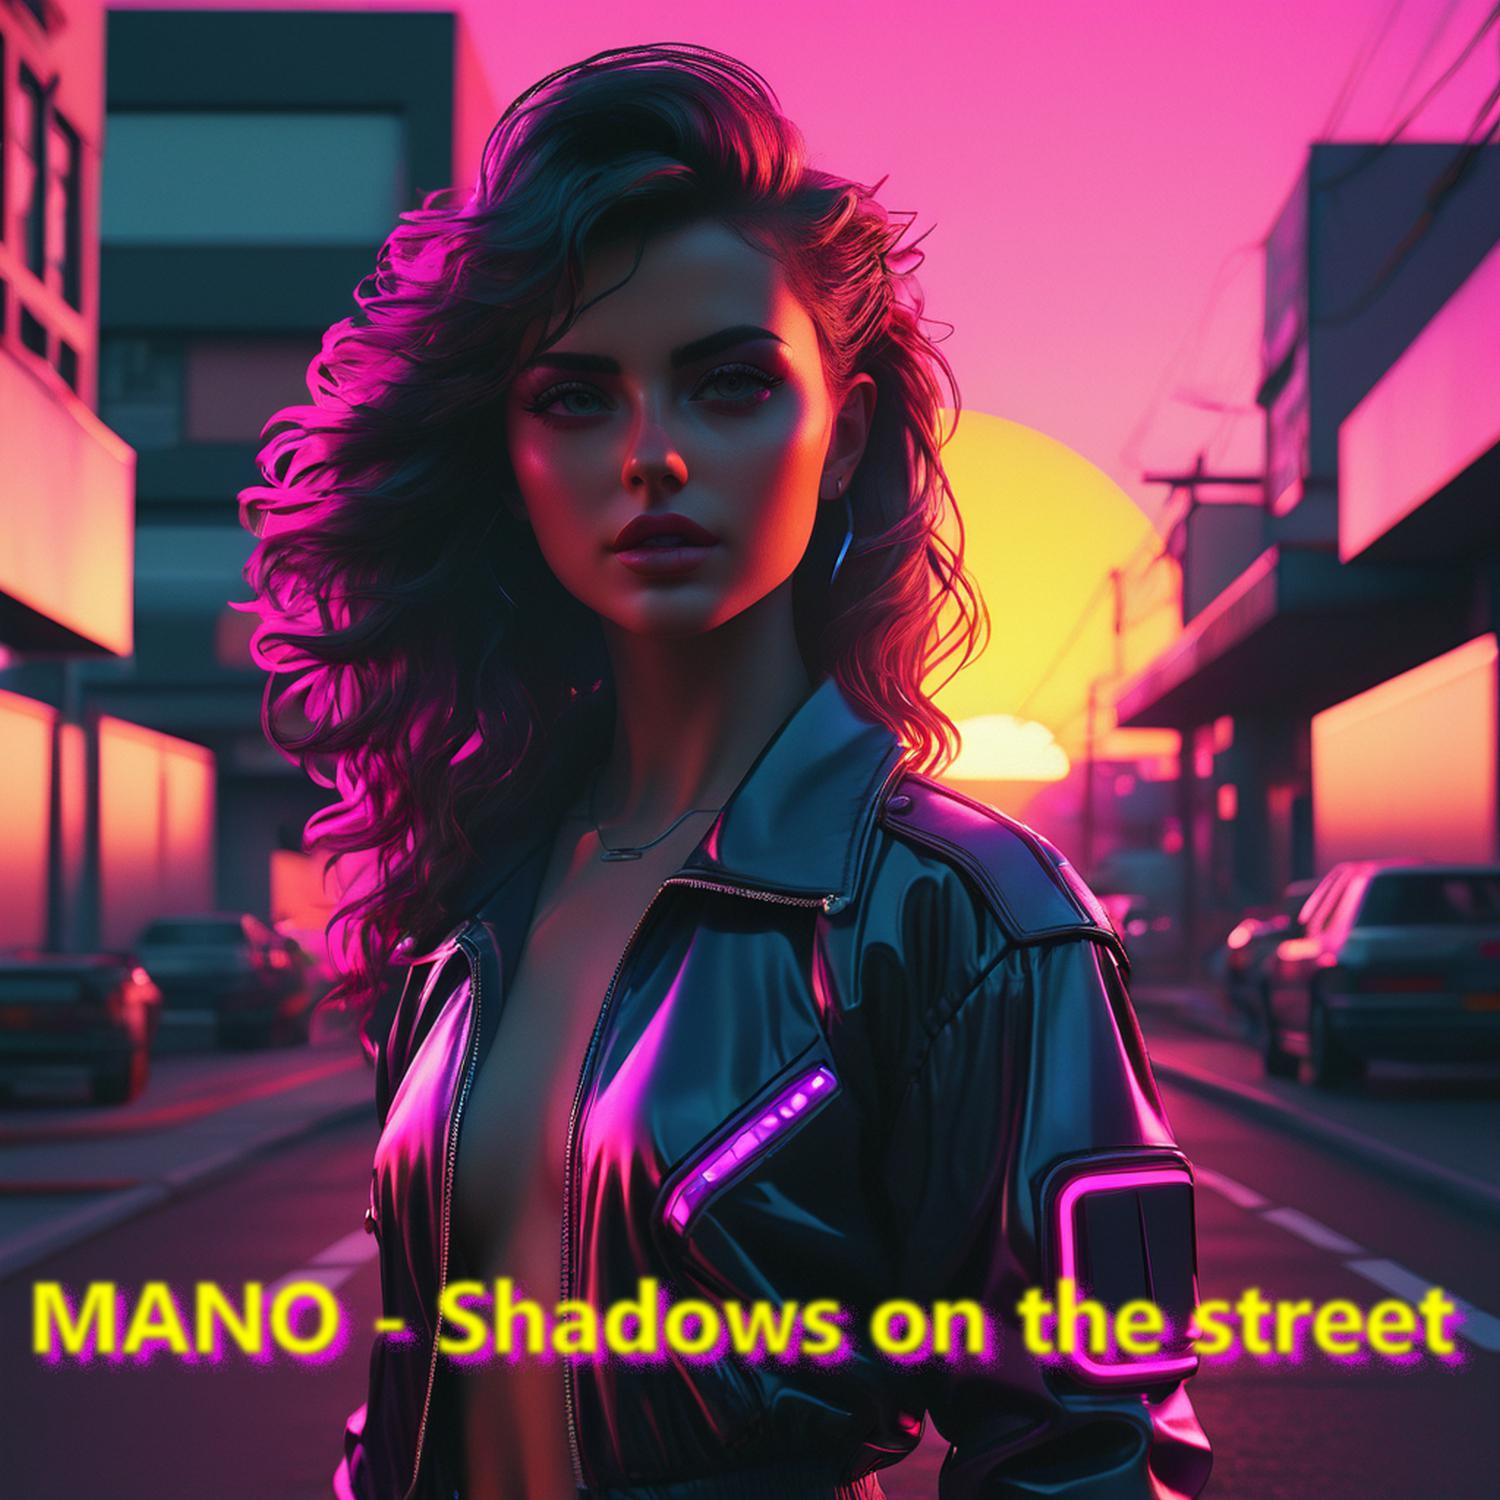 Mano - Shadows on the street